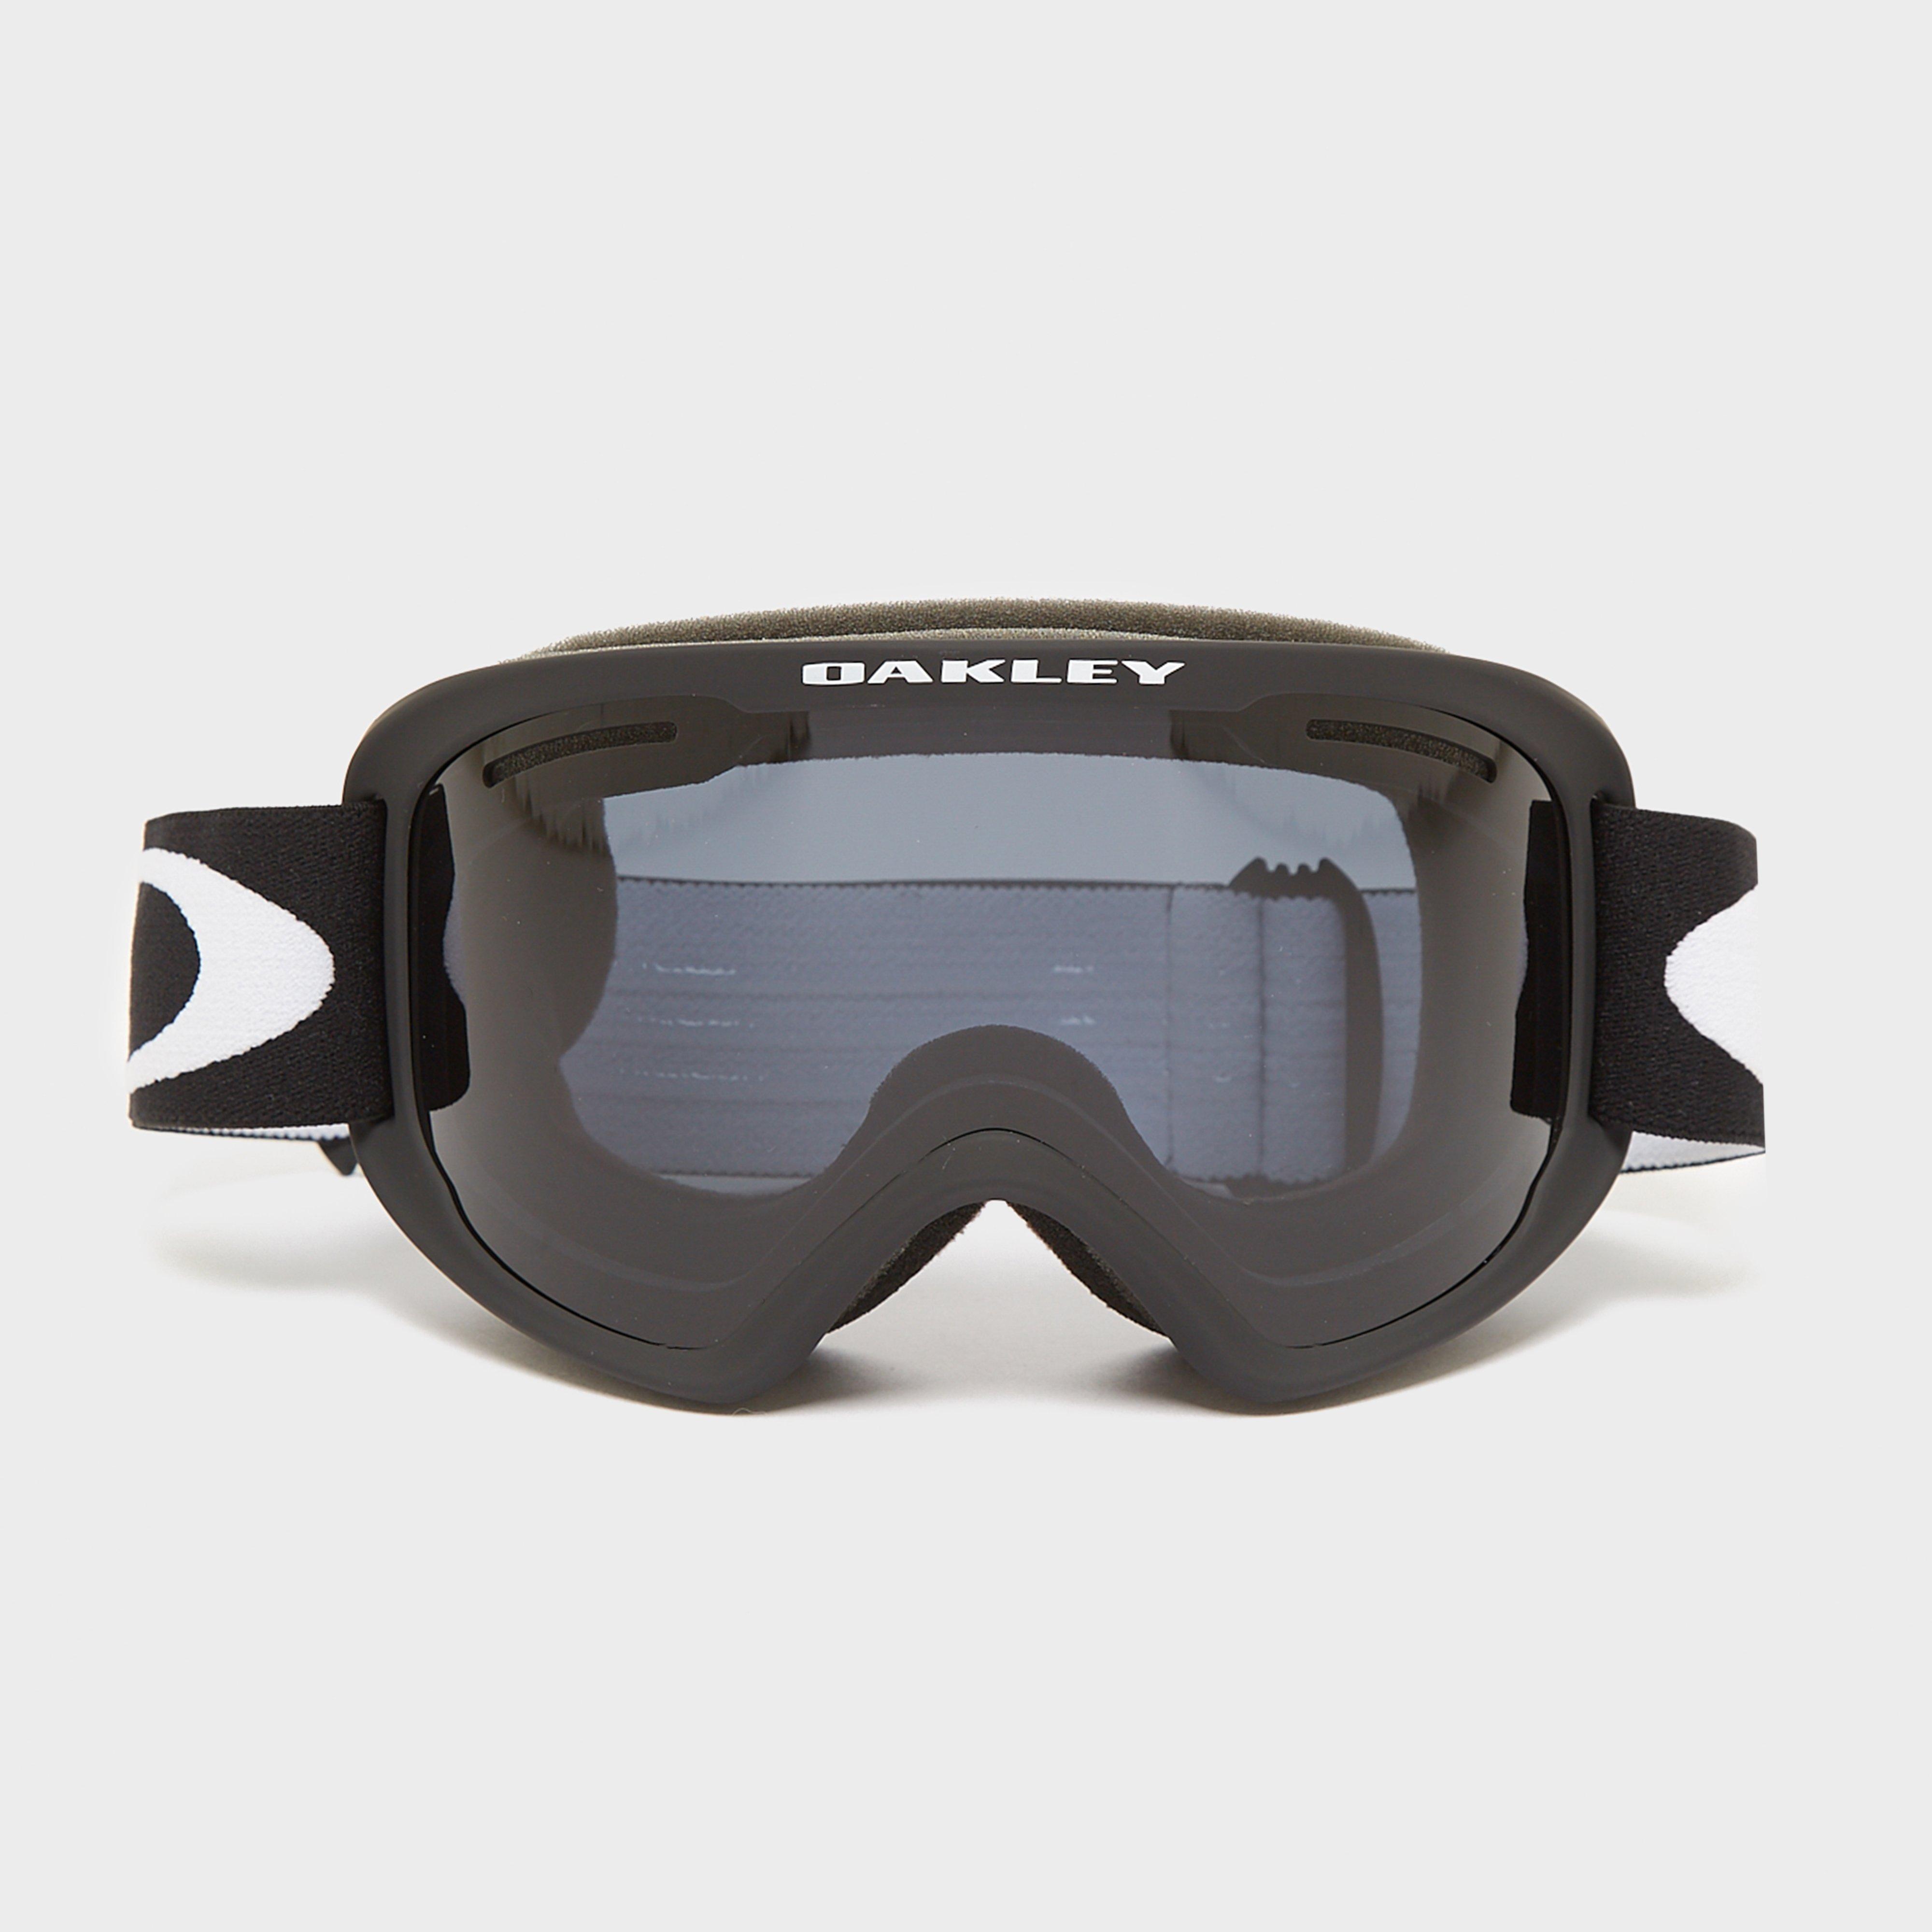 slope pro snow goggles